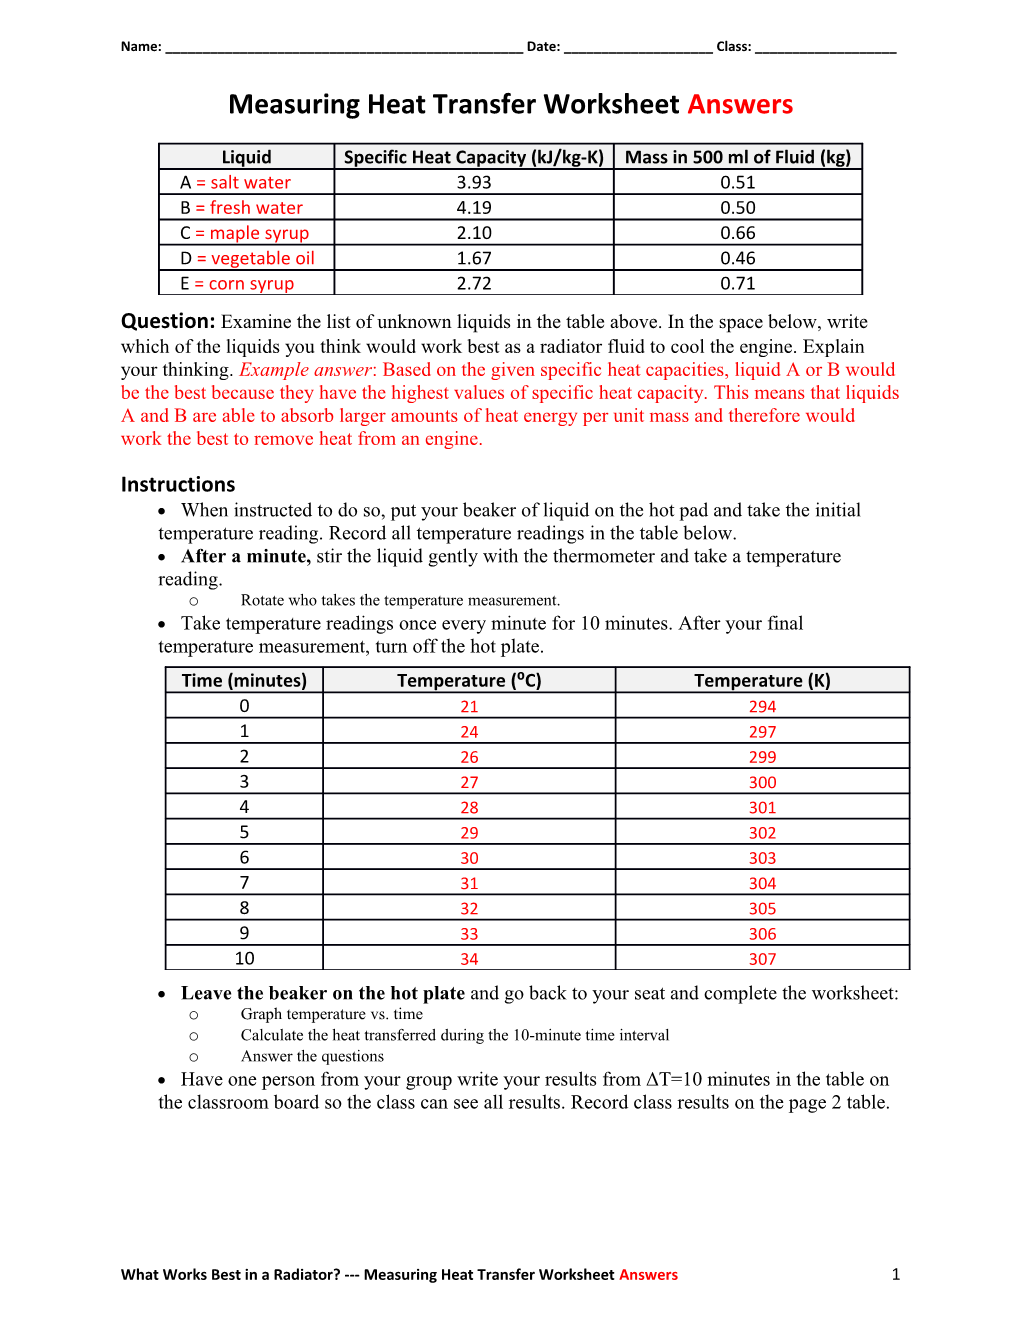 Measuring Heat Transfer Worksheet Answers